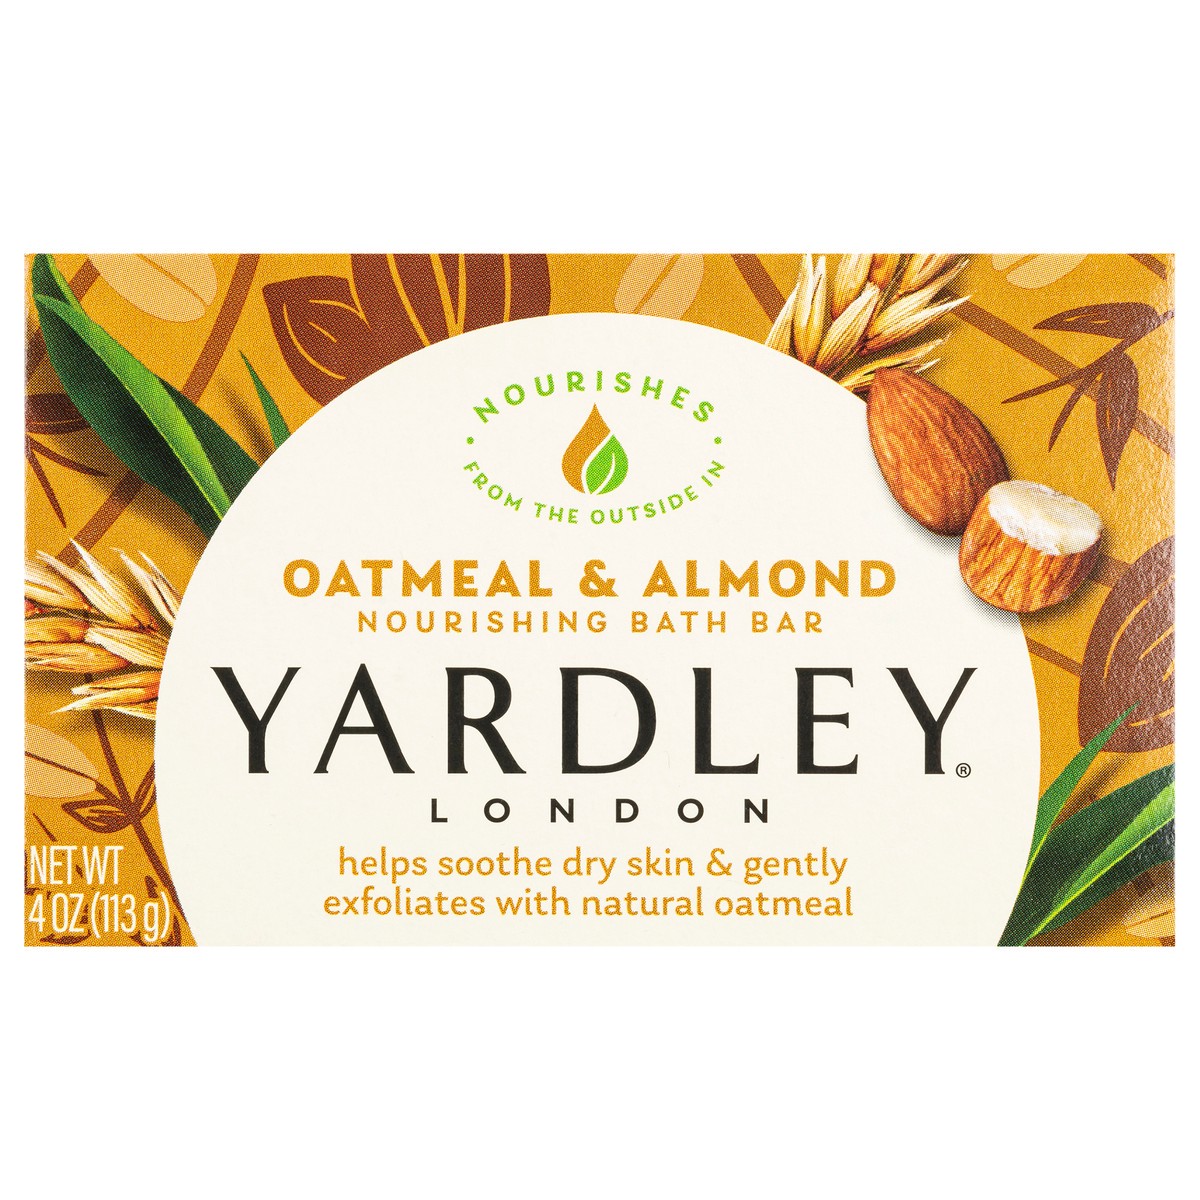 slide 1 of 7, Yardley London Nourishing Bath Soap Bar Oatmeal & Almond, Helps Soothe Dry Skin & Gently Exfoliates with Natural Oatmeal, 4.0 oz Bath Bar, 1 Soap Bar, 4 oz